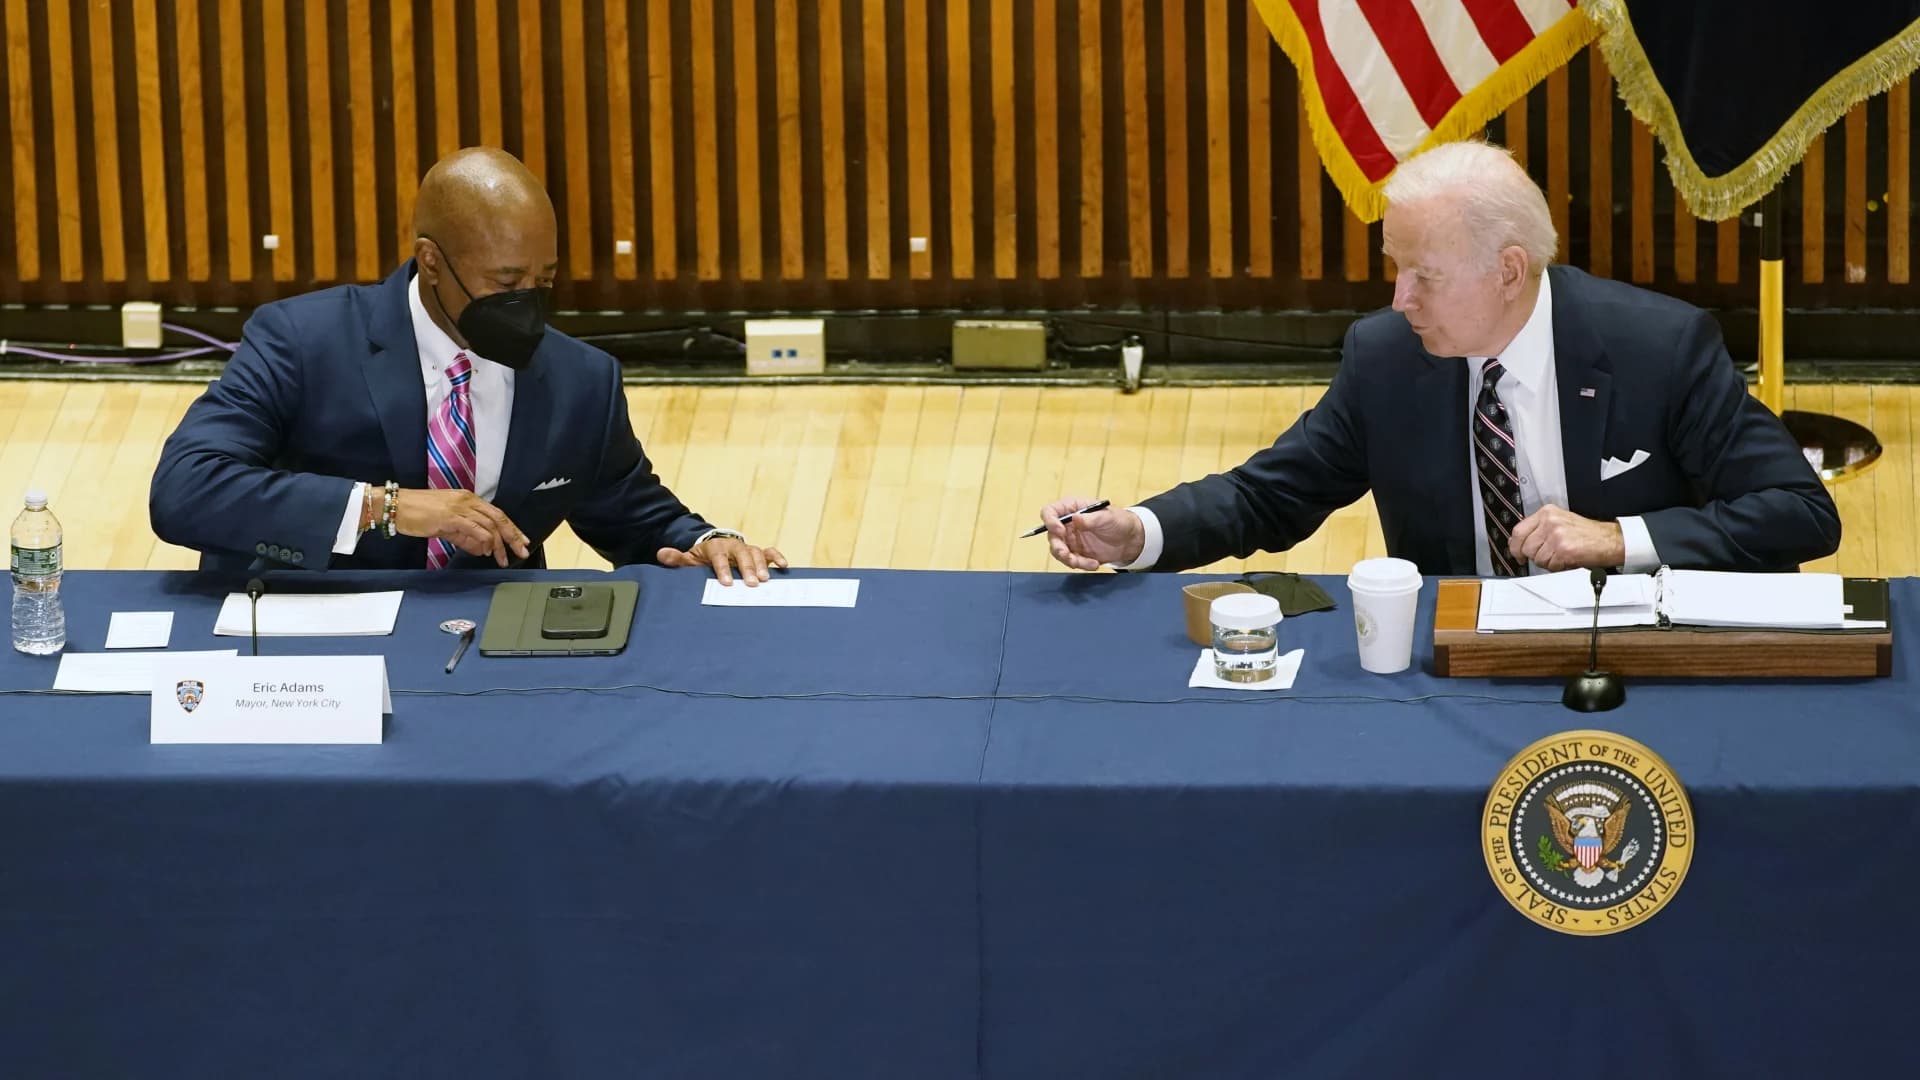 WATCH: Mayor Adams comments on President Biden's NYC visit